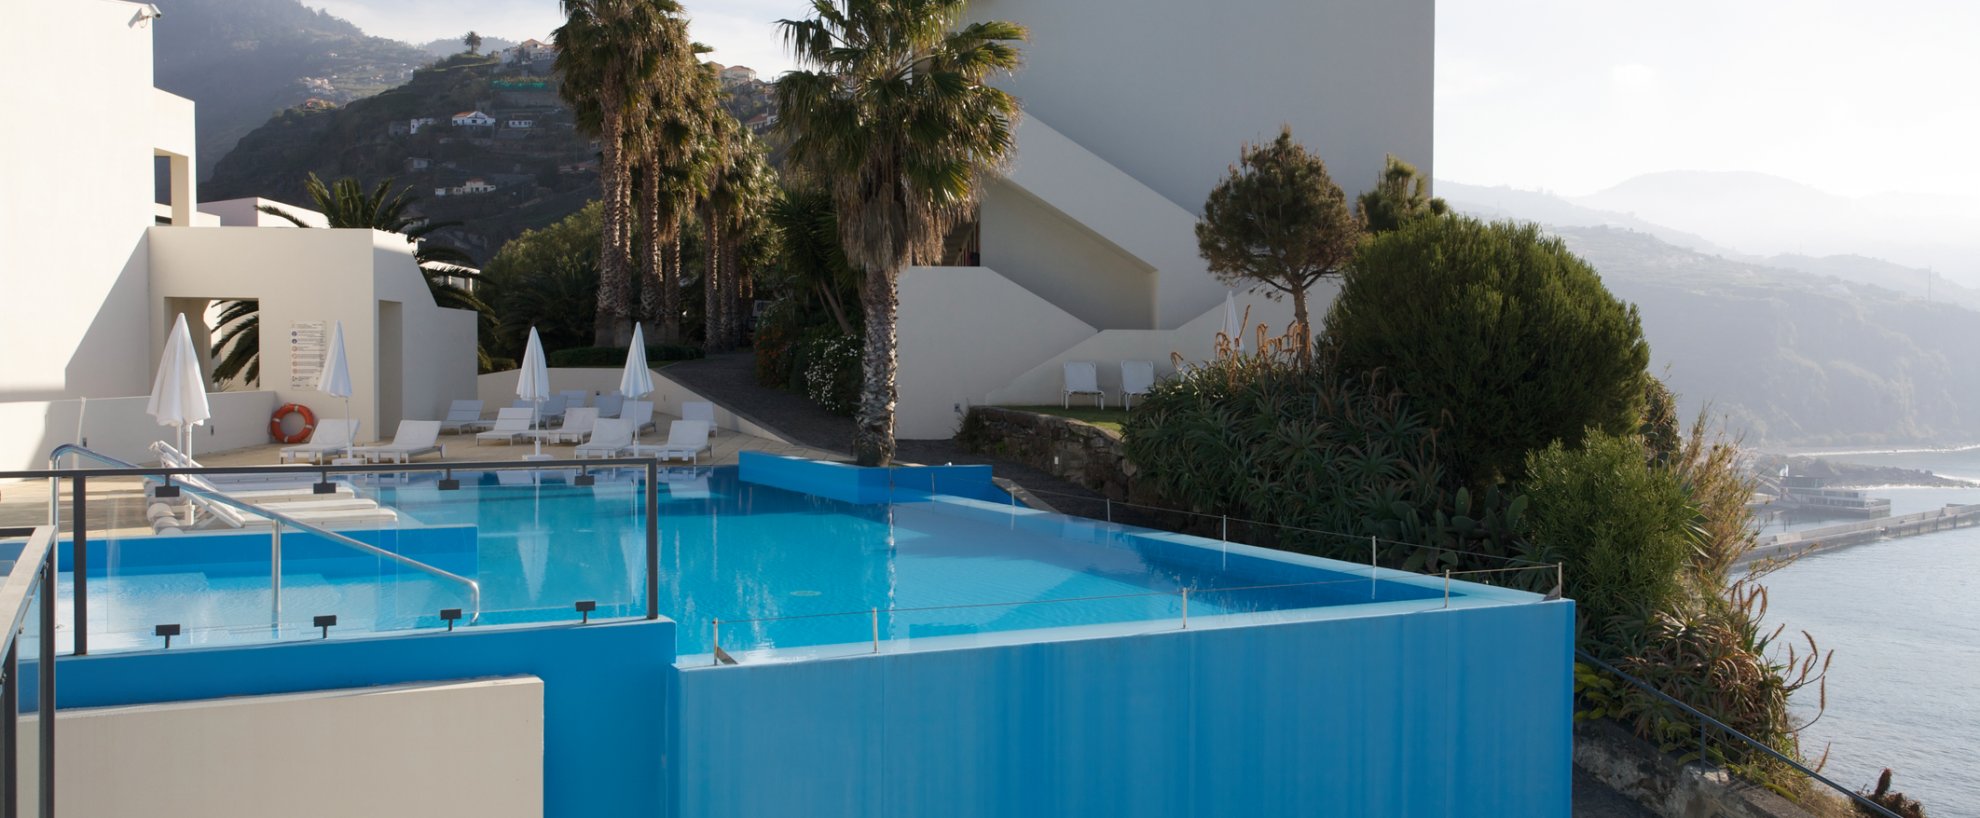 Portugal Madeira Ponta do Sol Designhotel Design Hotel Estalagem Pool Swimmingpool